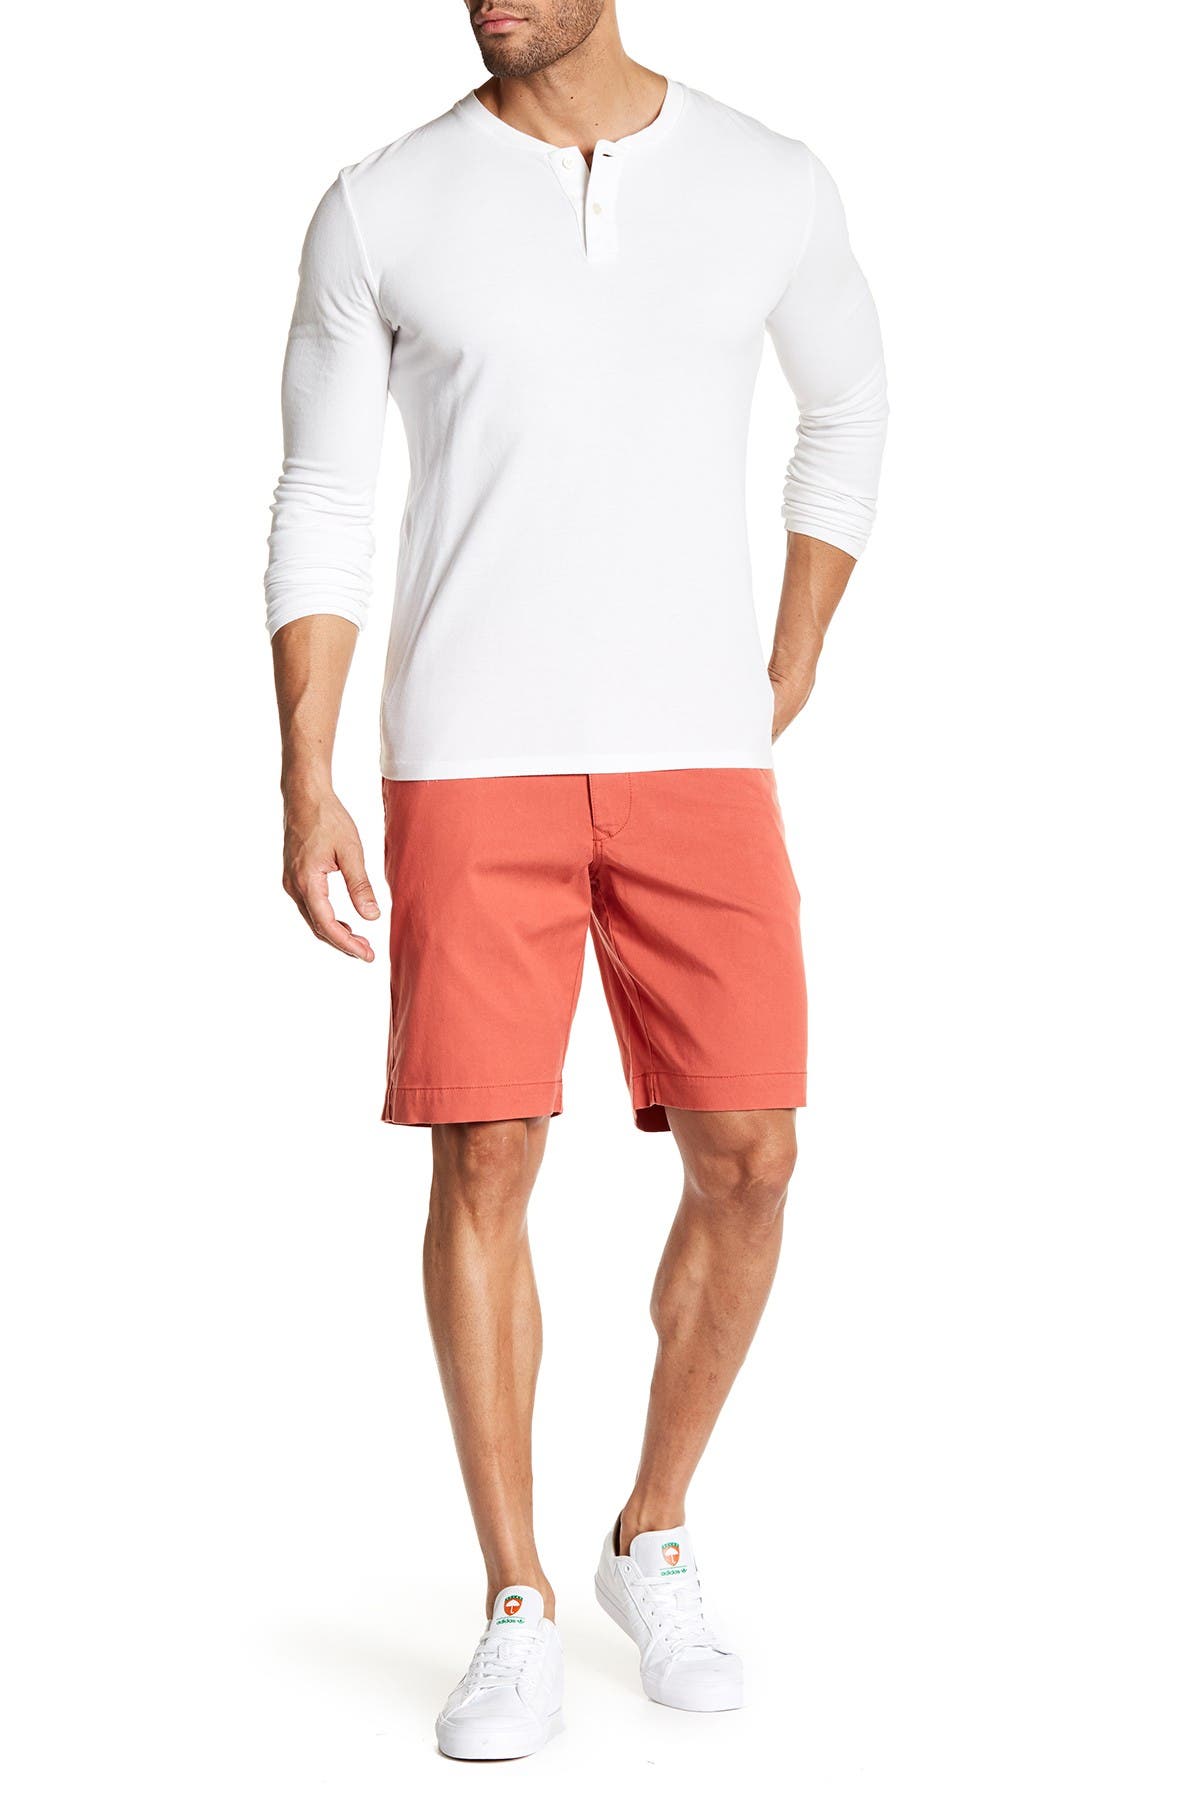 tommy bahama offshore shorts